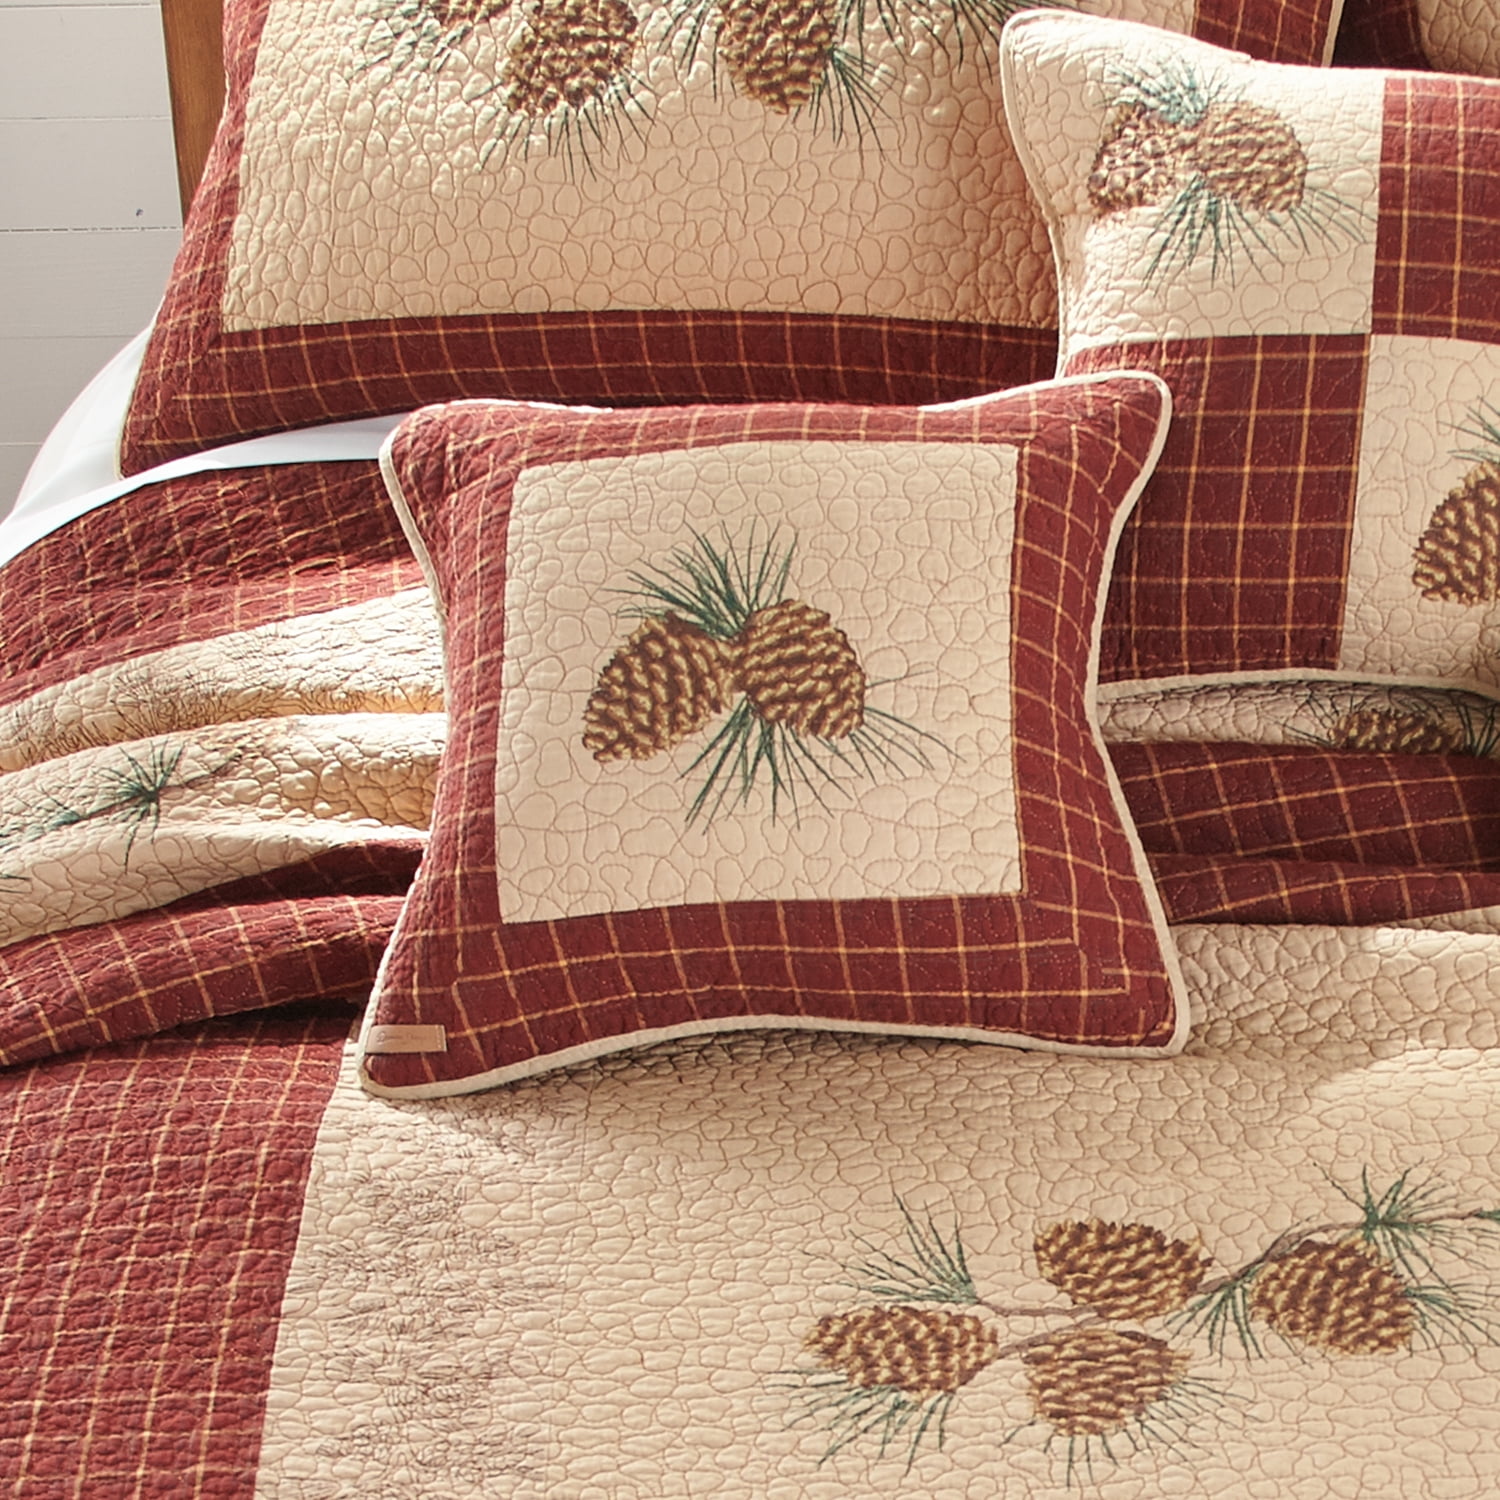 80116 15 X 15 In. Pine Lodge Pinecone Decorative Pillow - Brick Red, Caramel & Tan